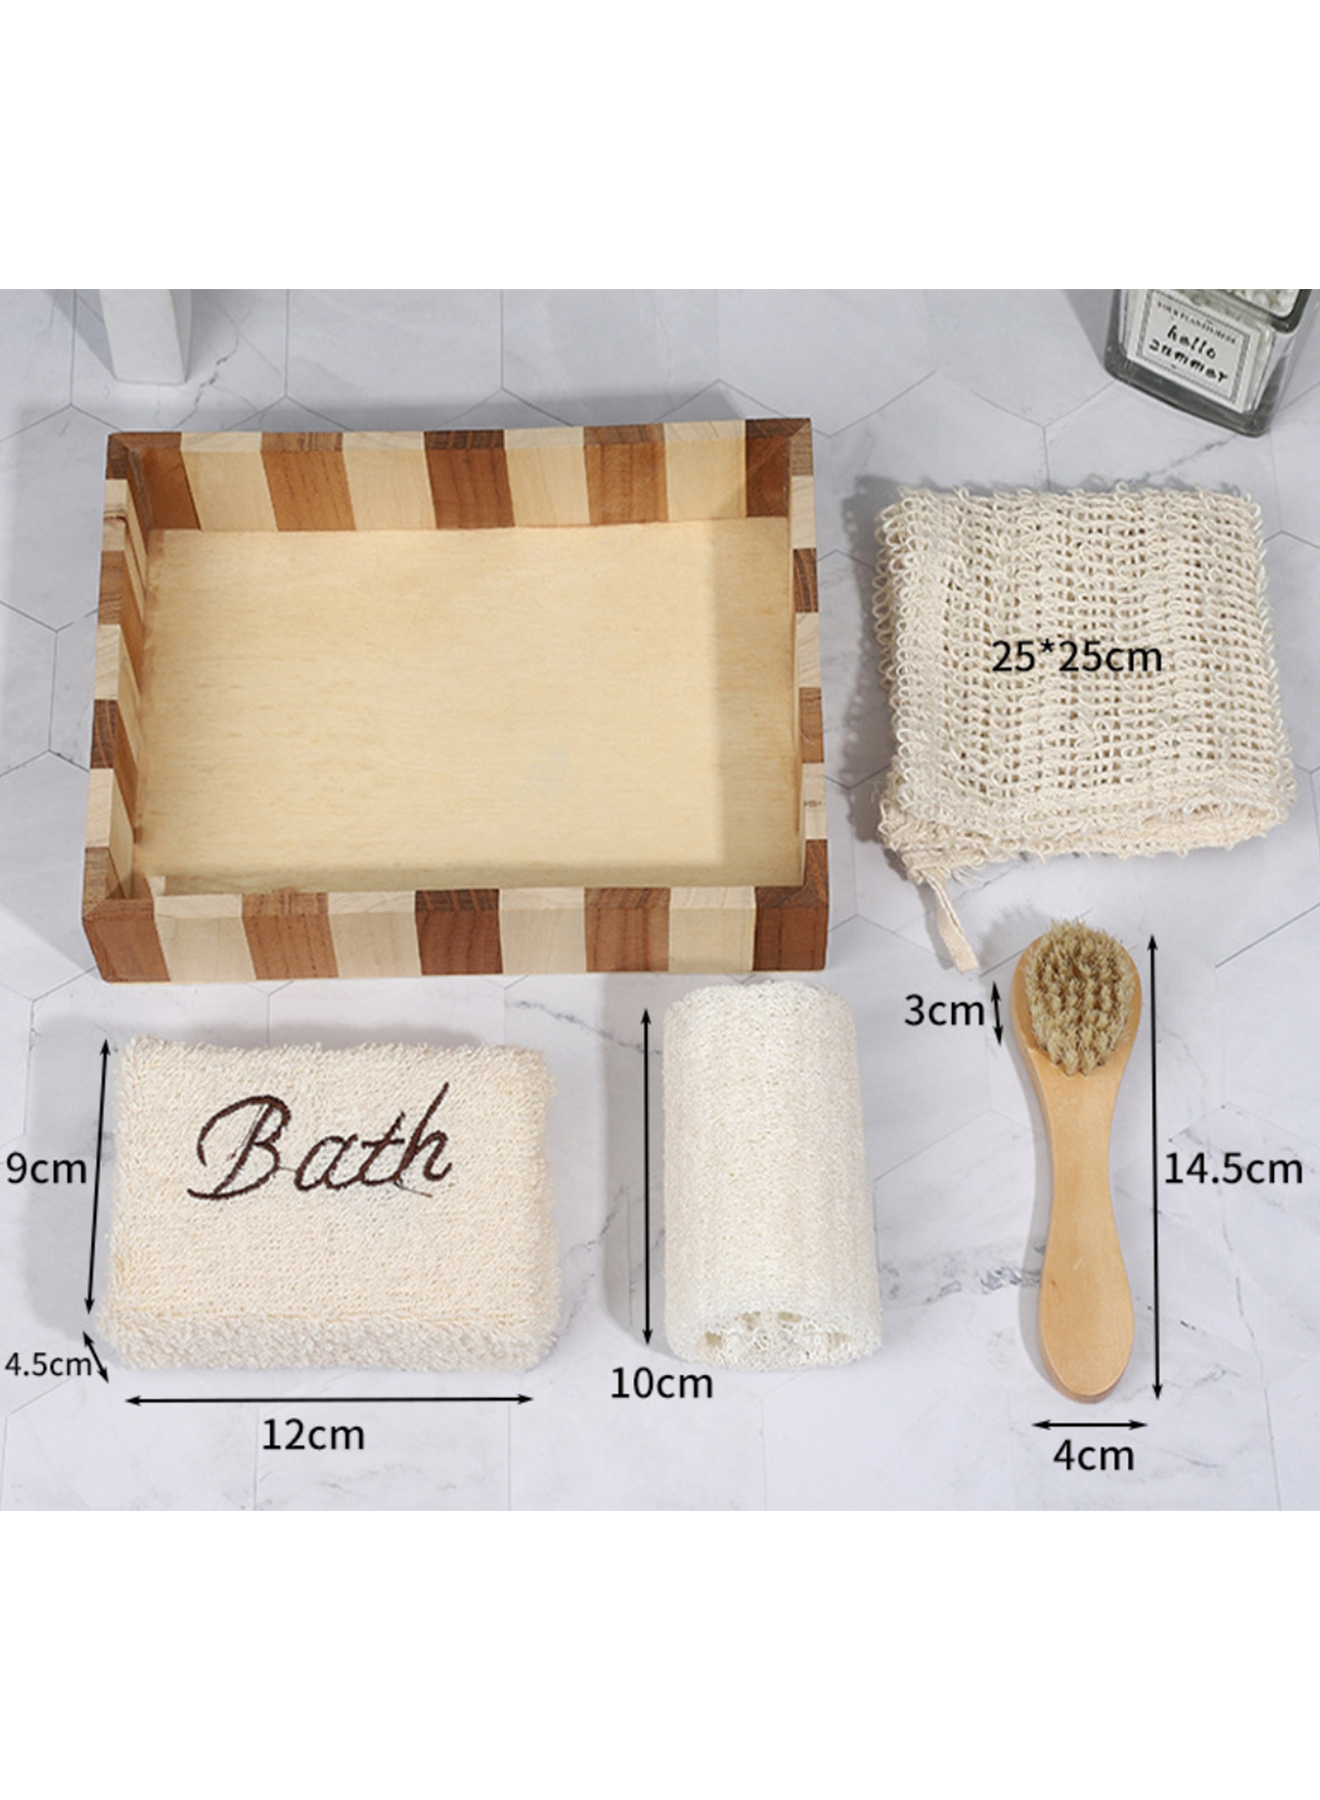 4-Piece Bath Gift Box Set